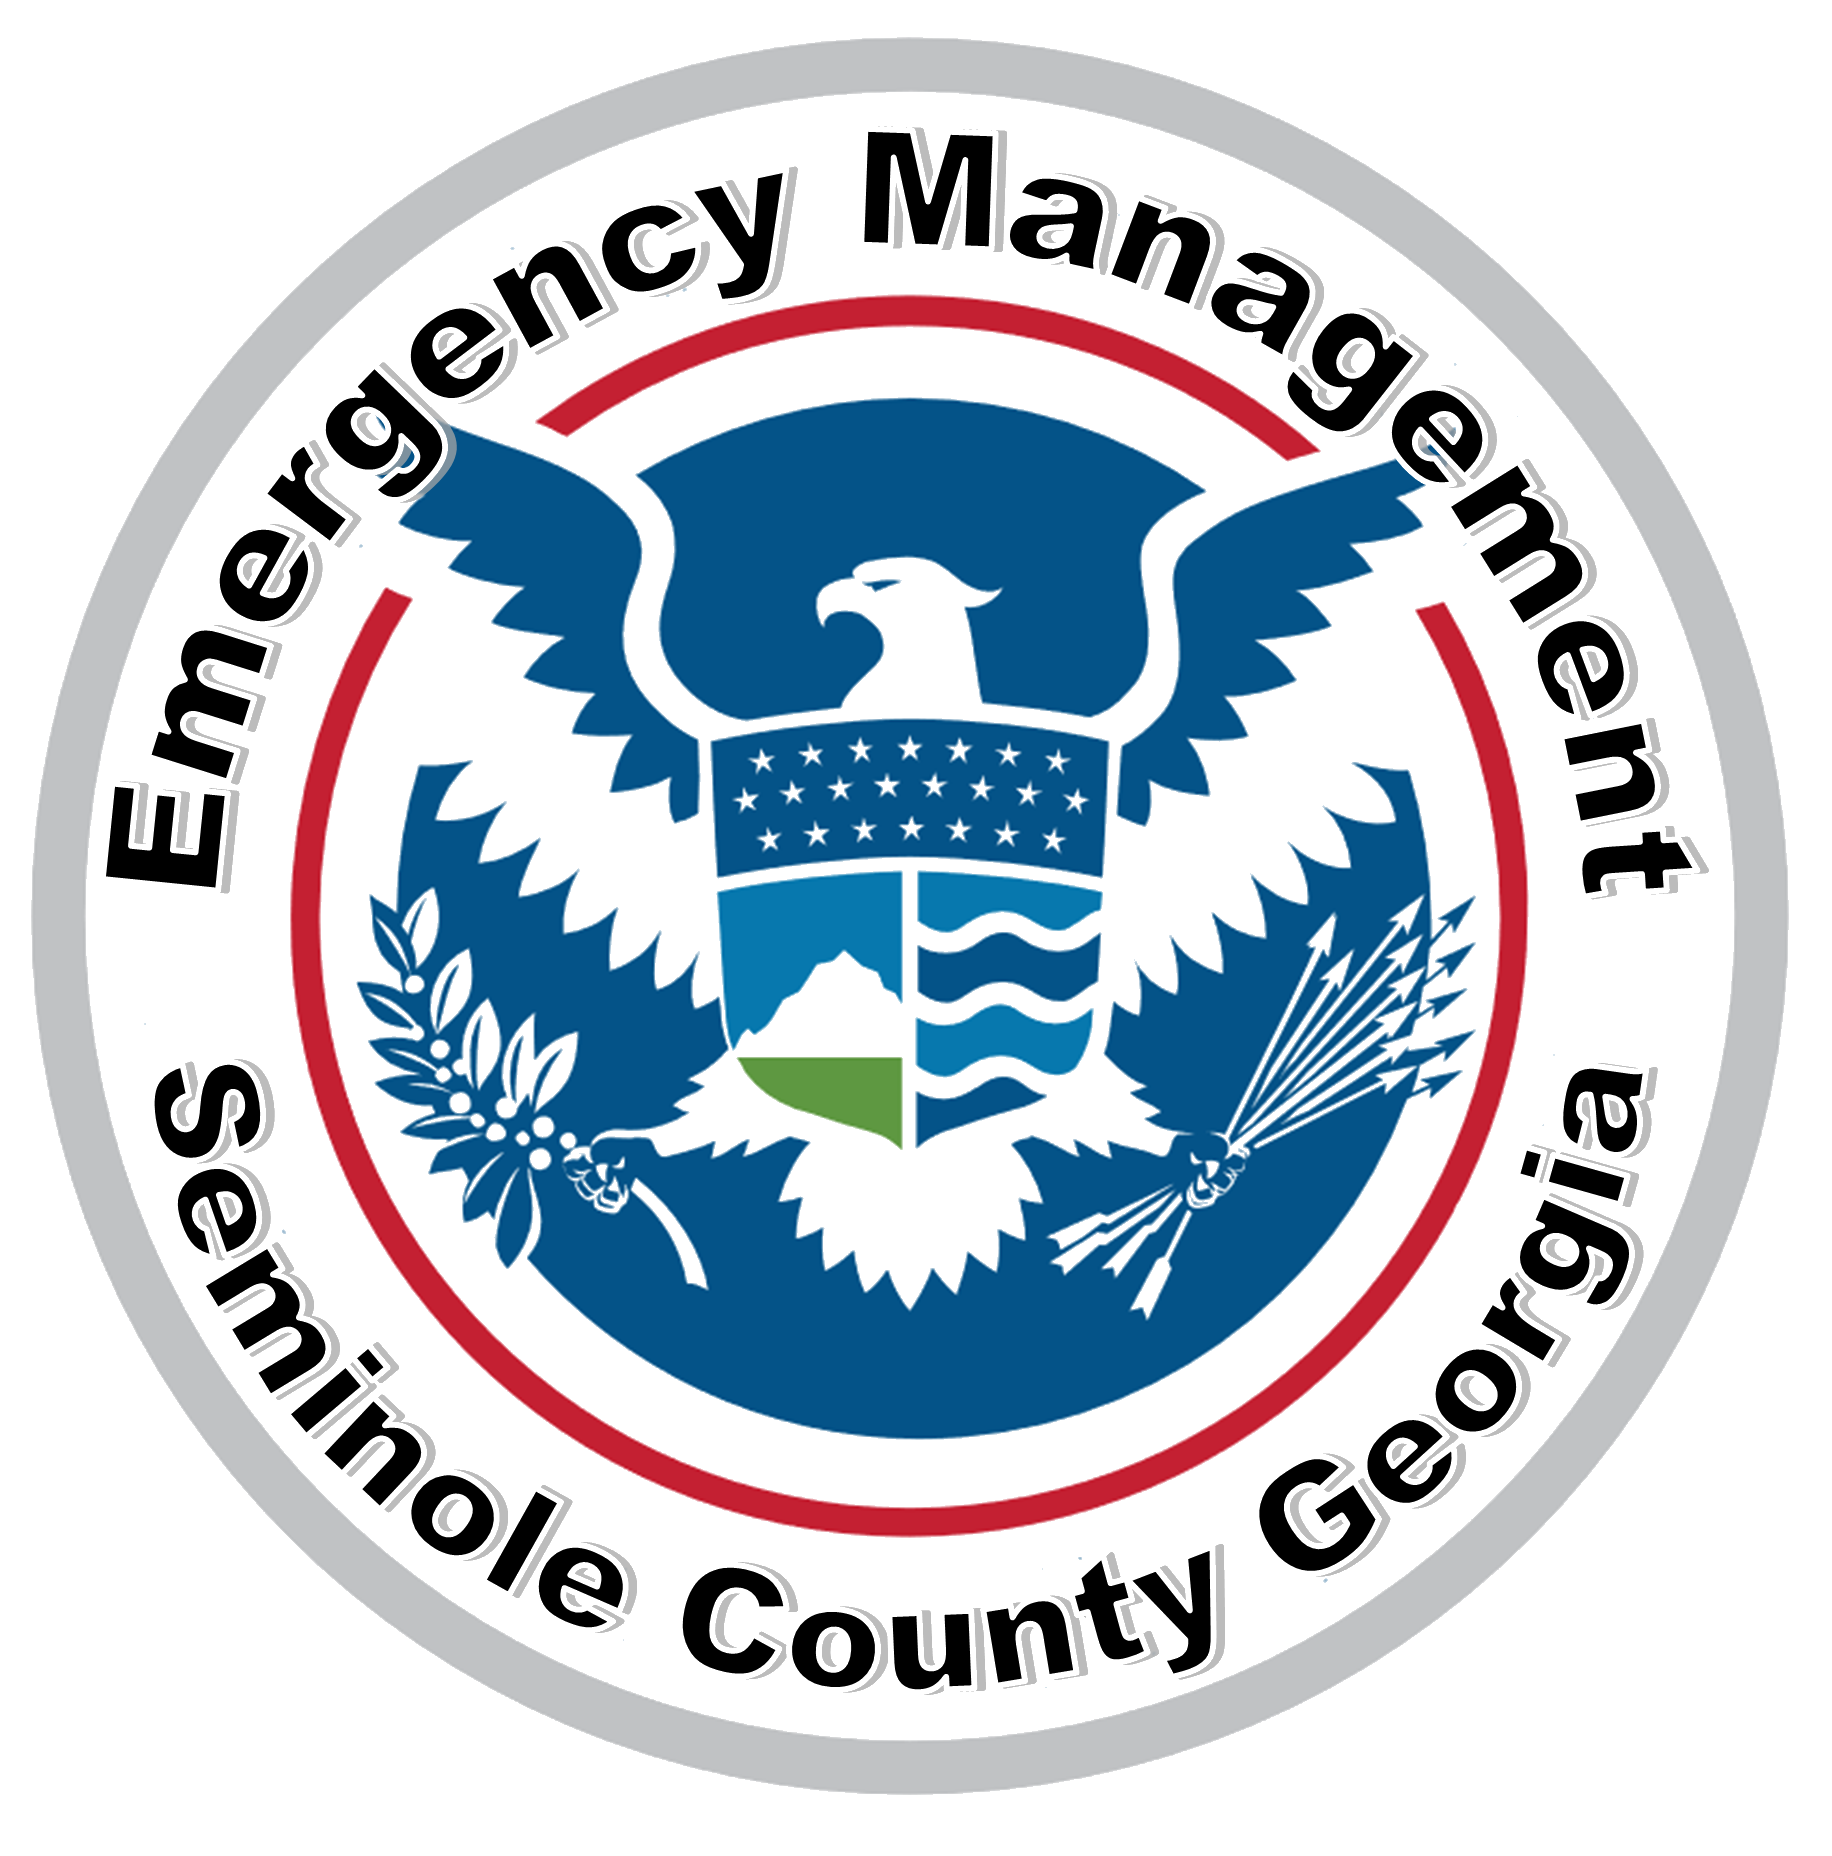 Contact Seminole County Georgia Emergency Management